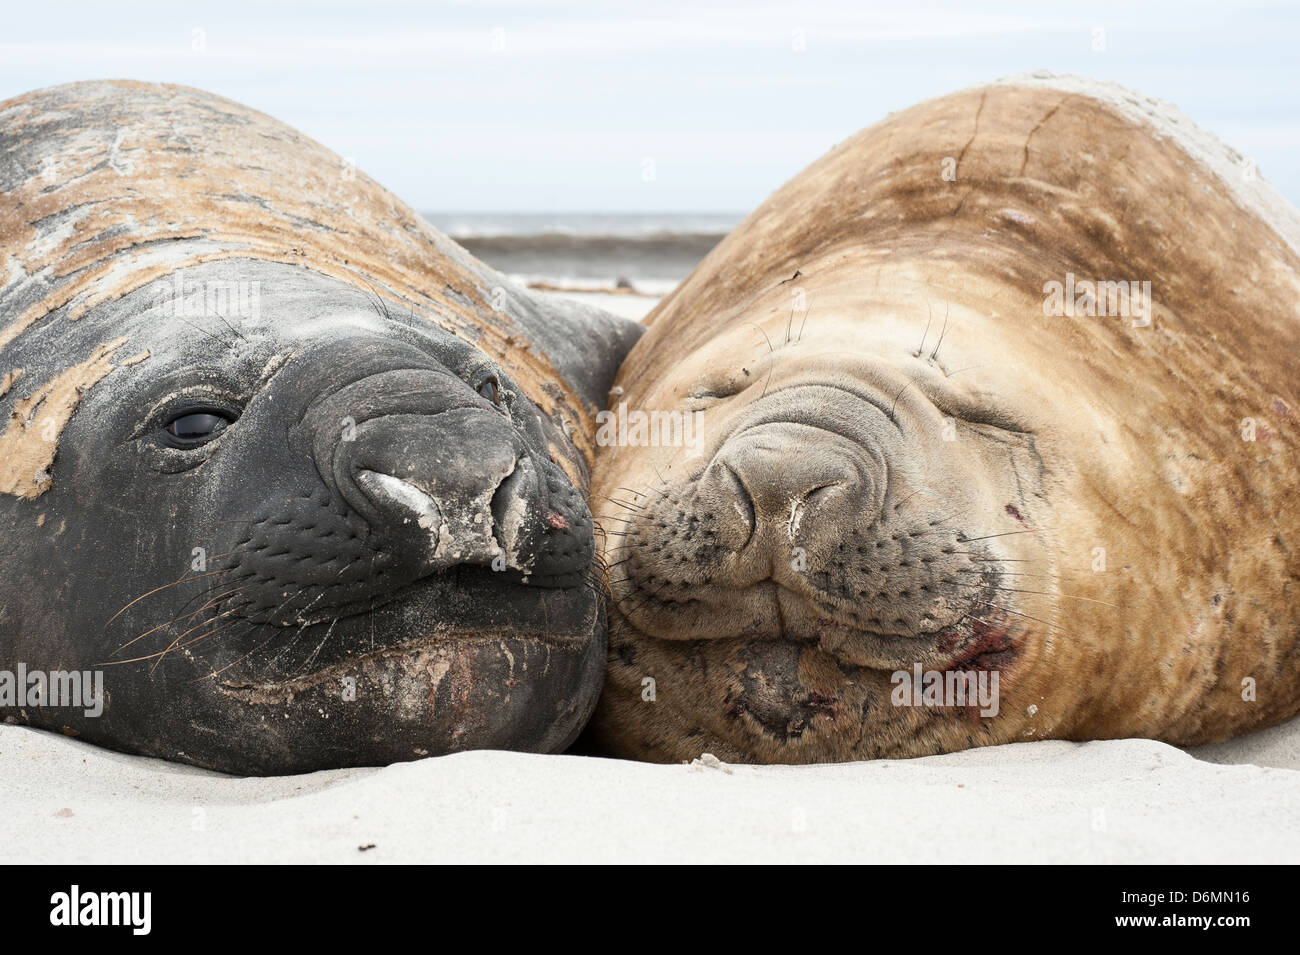 Southern Elephant Seal, Mirounga leonina, Südlicher See-Elefant, Sea Lion Island, Falkland Islands, two seals resting on beach Stock Photo